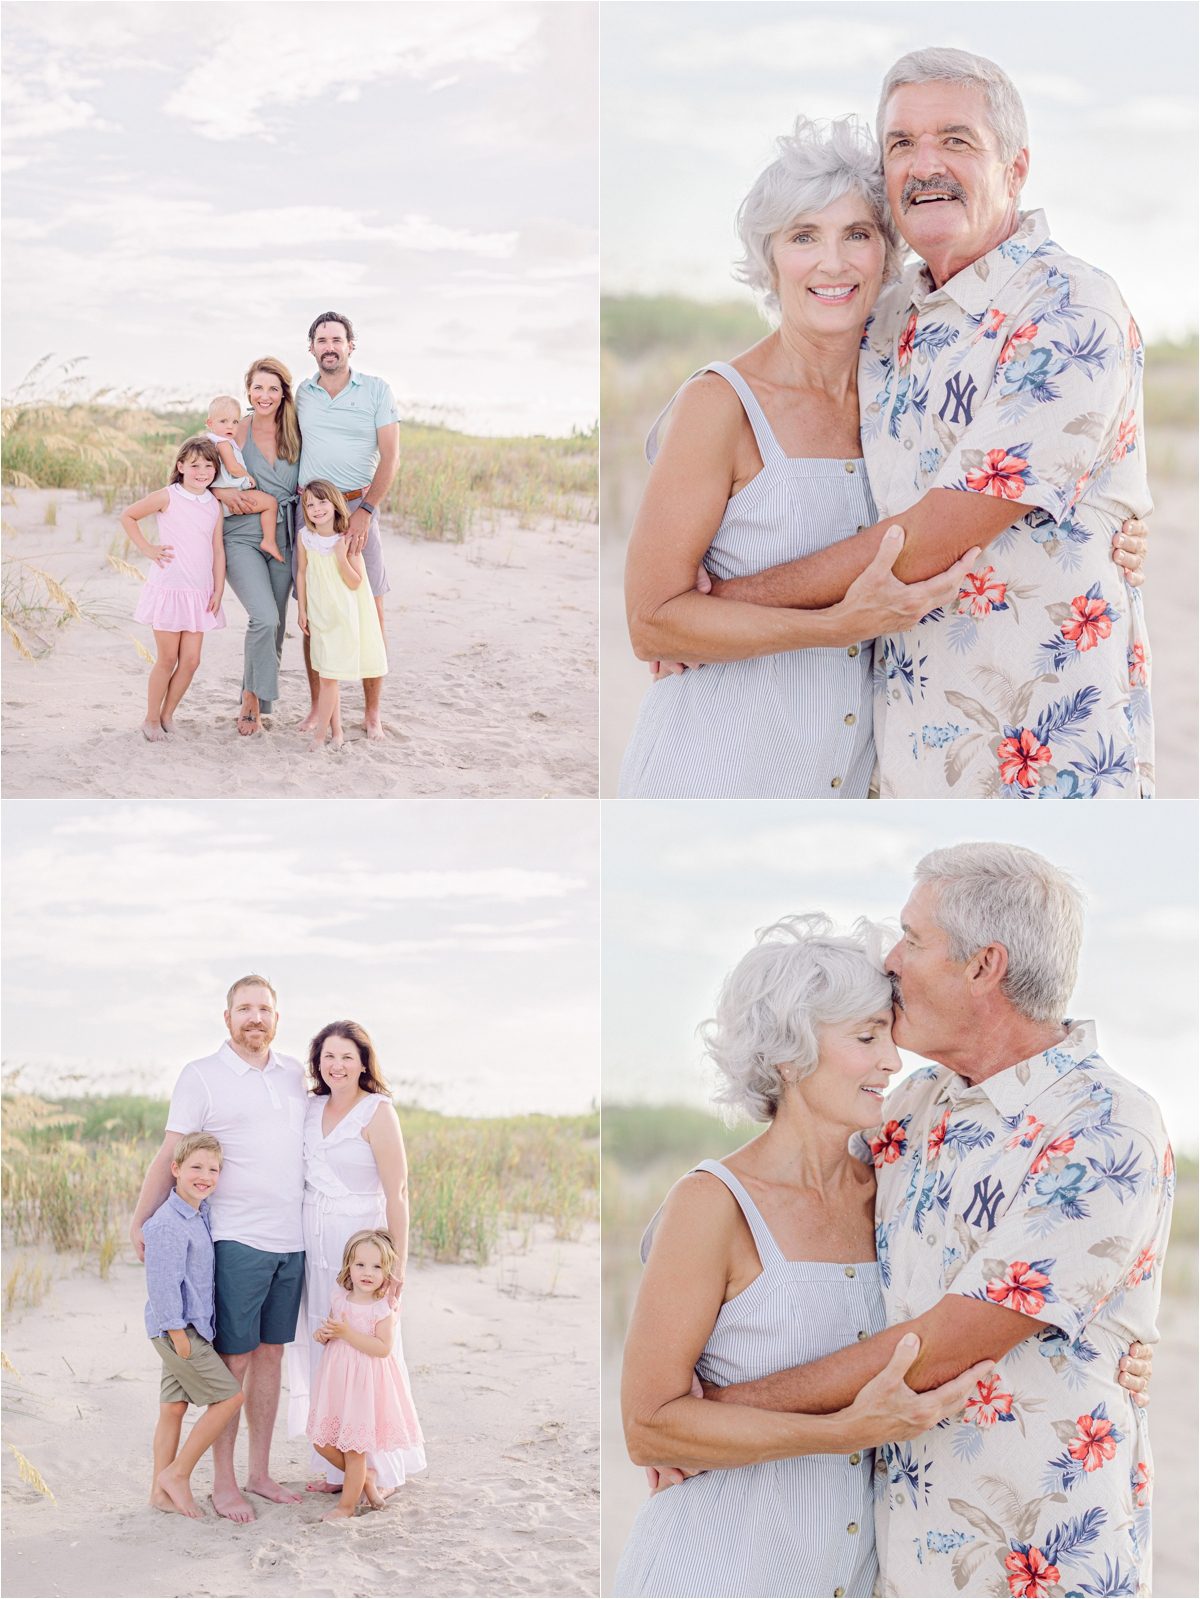 Grandparents and children summer family photos at Bald Head Island beach.